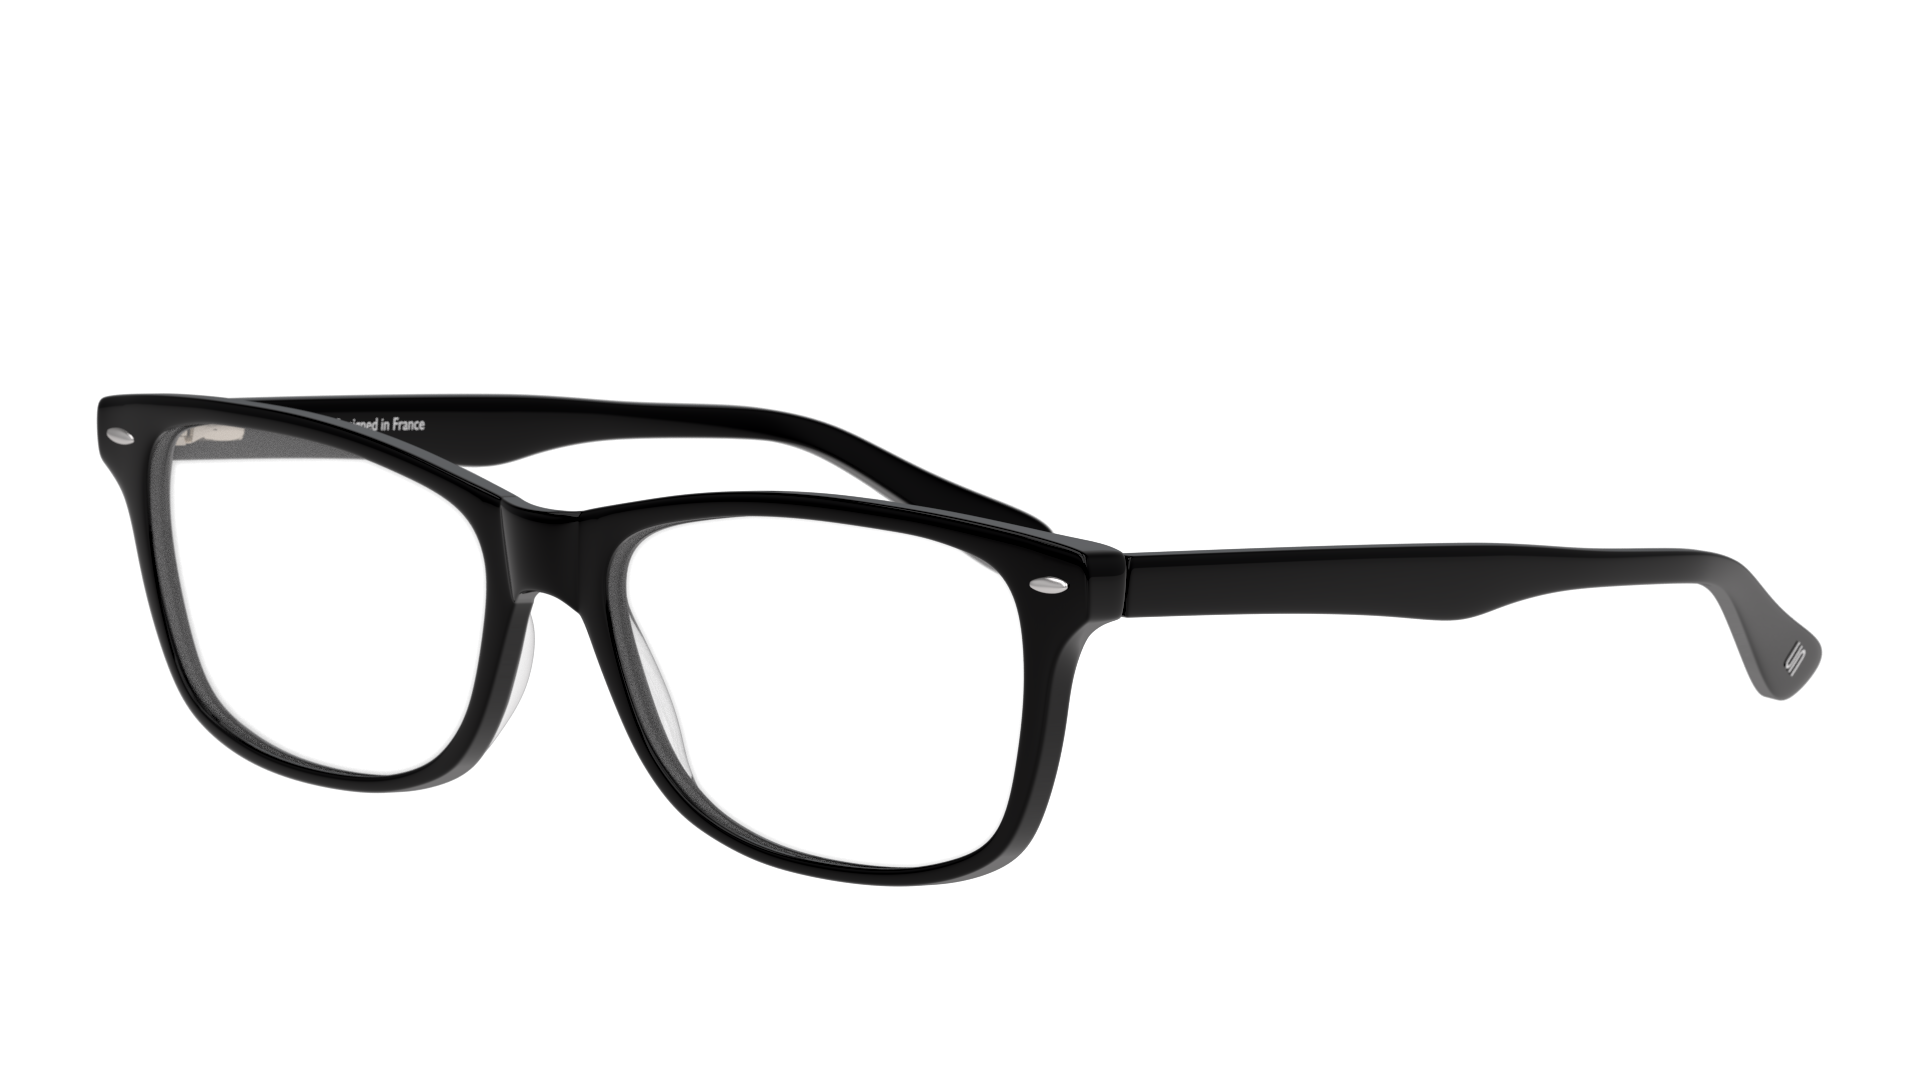 Angle_Left01 Unofficial UNOF0017 Glasses Transparent / Black